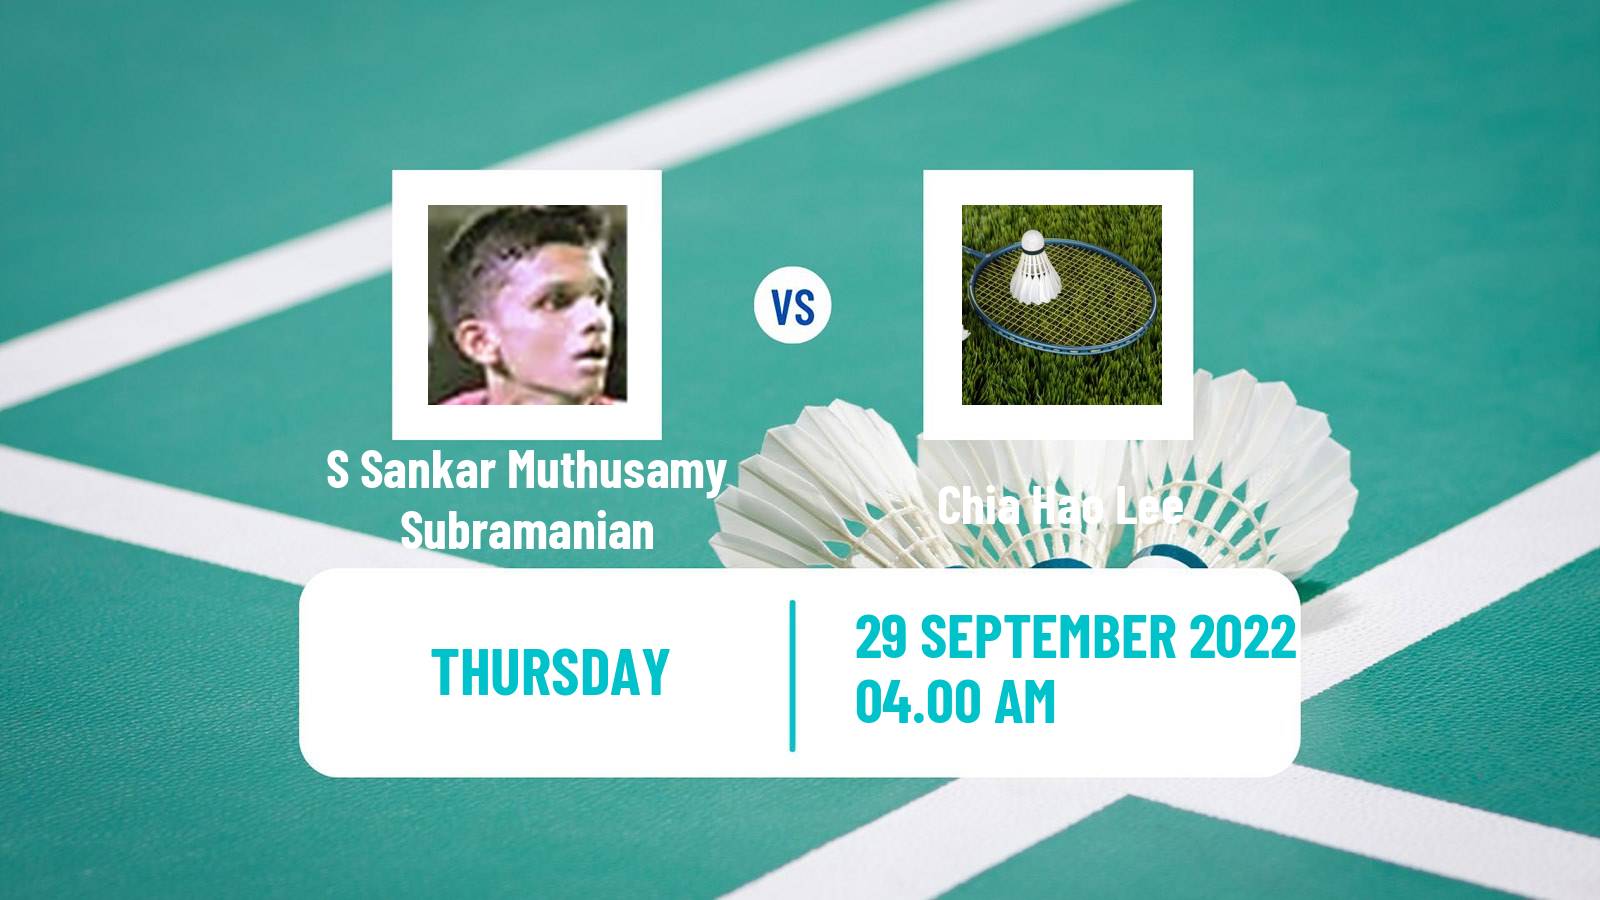 Badminton Badminton S Sankar Muthusamy Subramanian - Chia Hao Lee